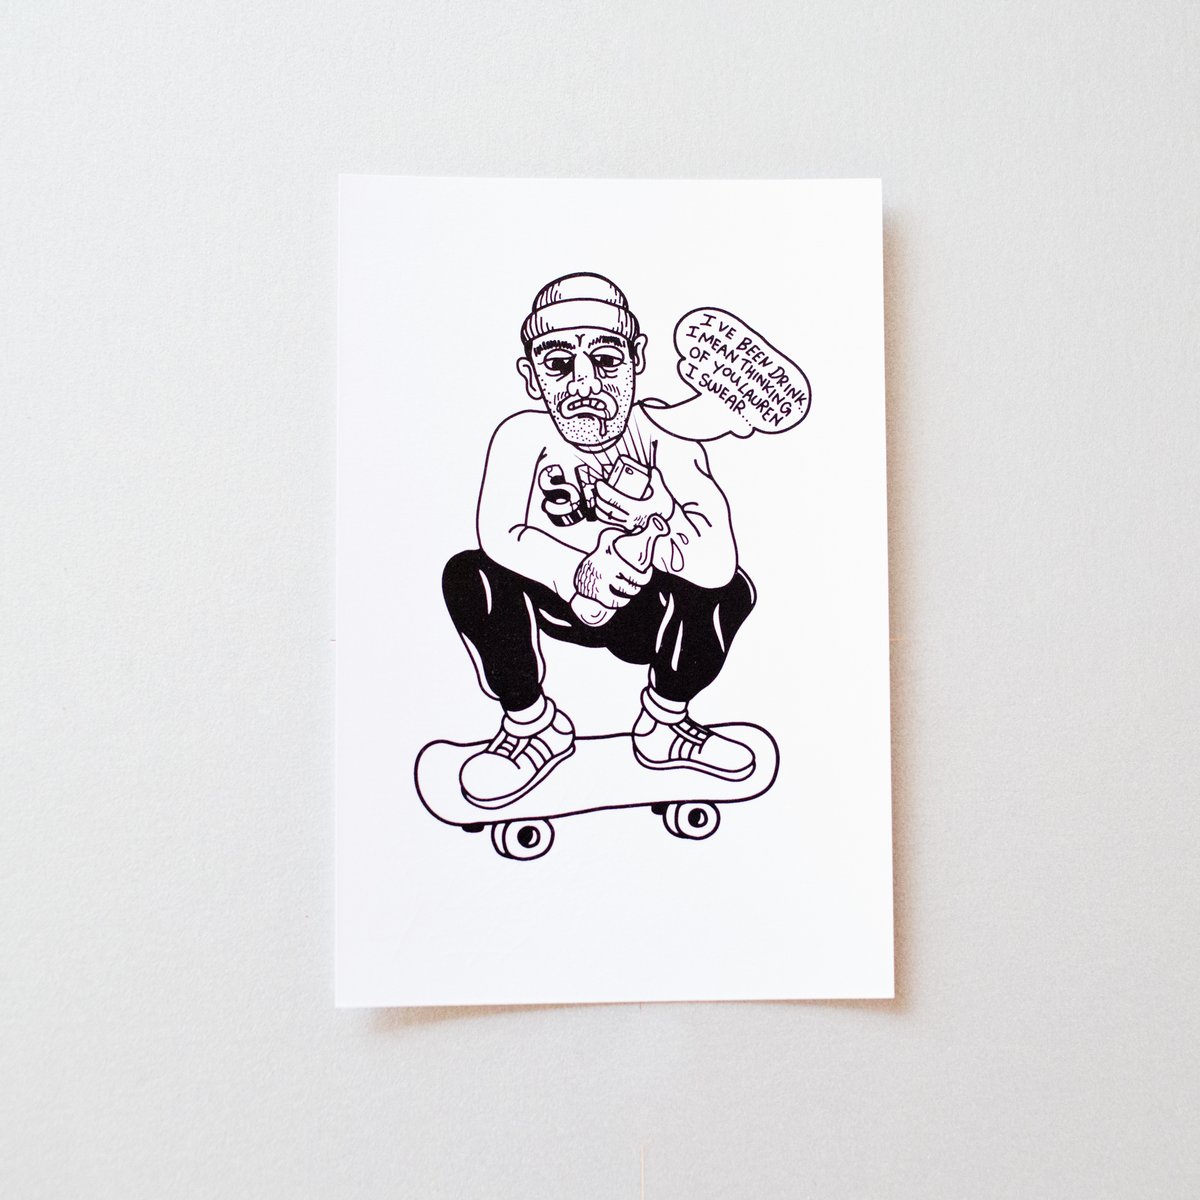 Image of "Skate or Love?" Print